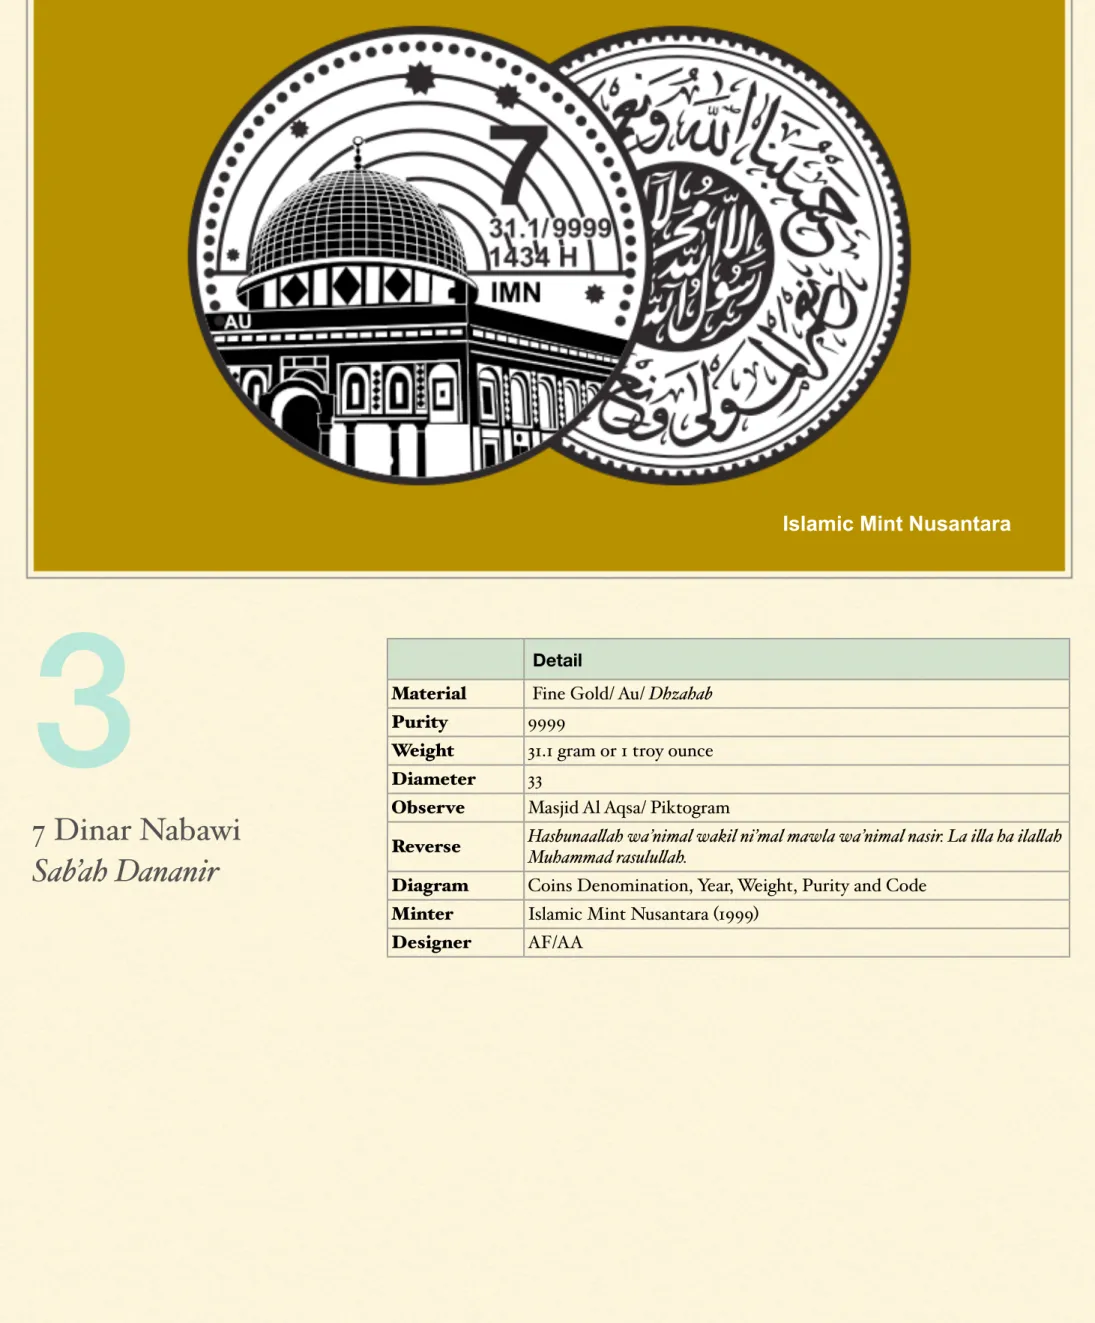 Diagram Coins Denomination, Year, Weight, Purity and Code Minter Islamic Mint Nusantara (1999)